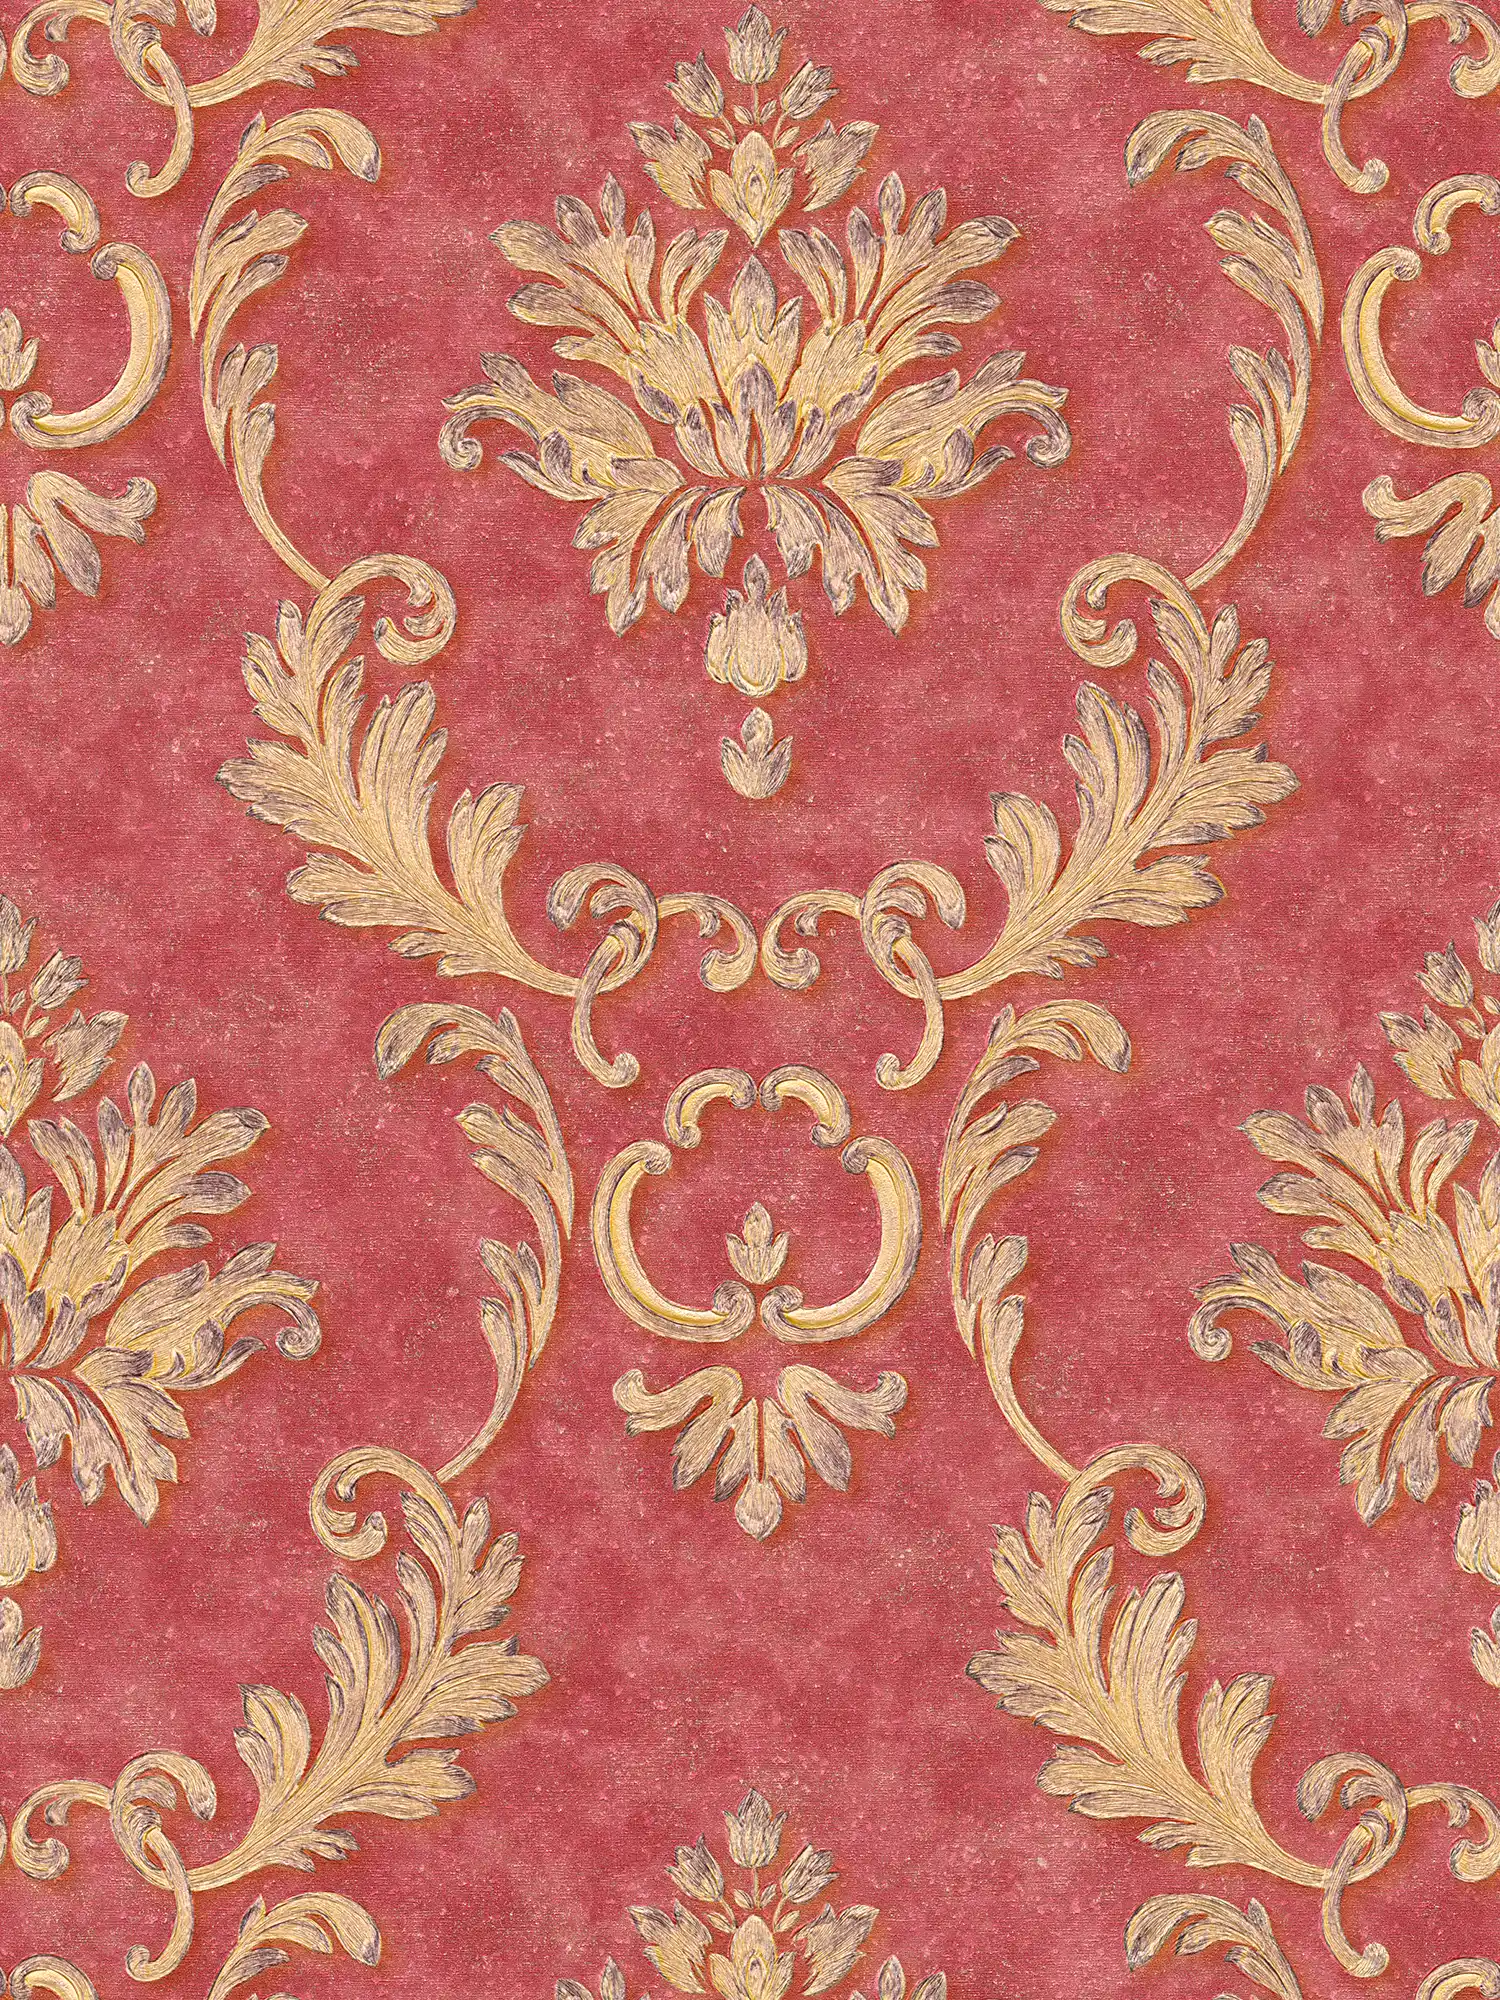         Designer wallpaper floral ornaments & metallic effect - red, gold
    